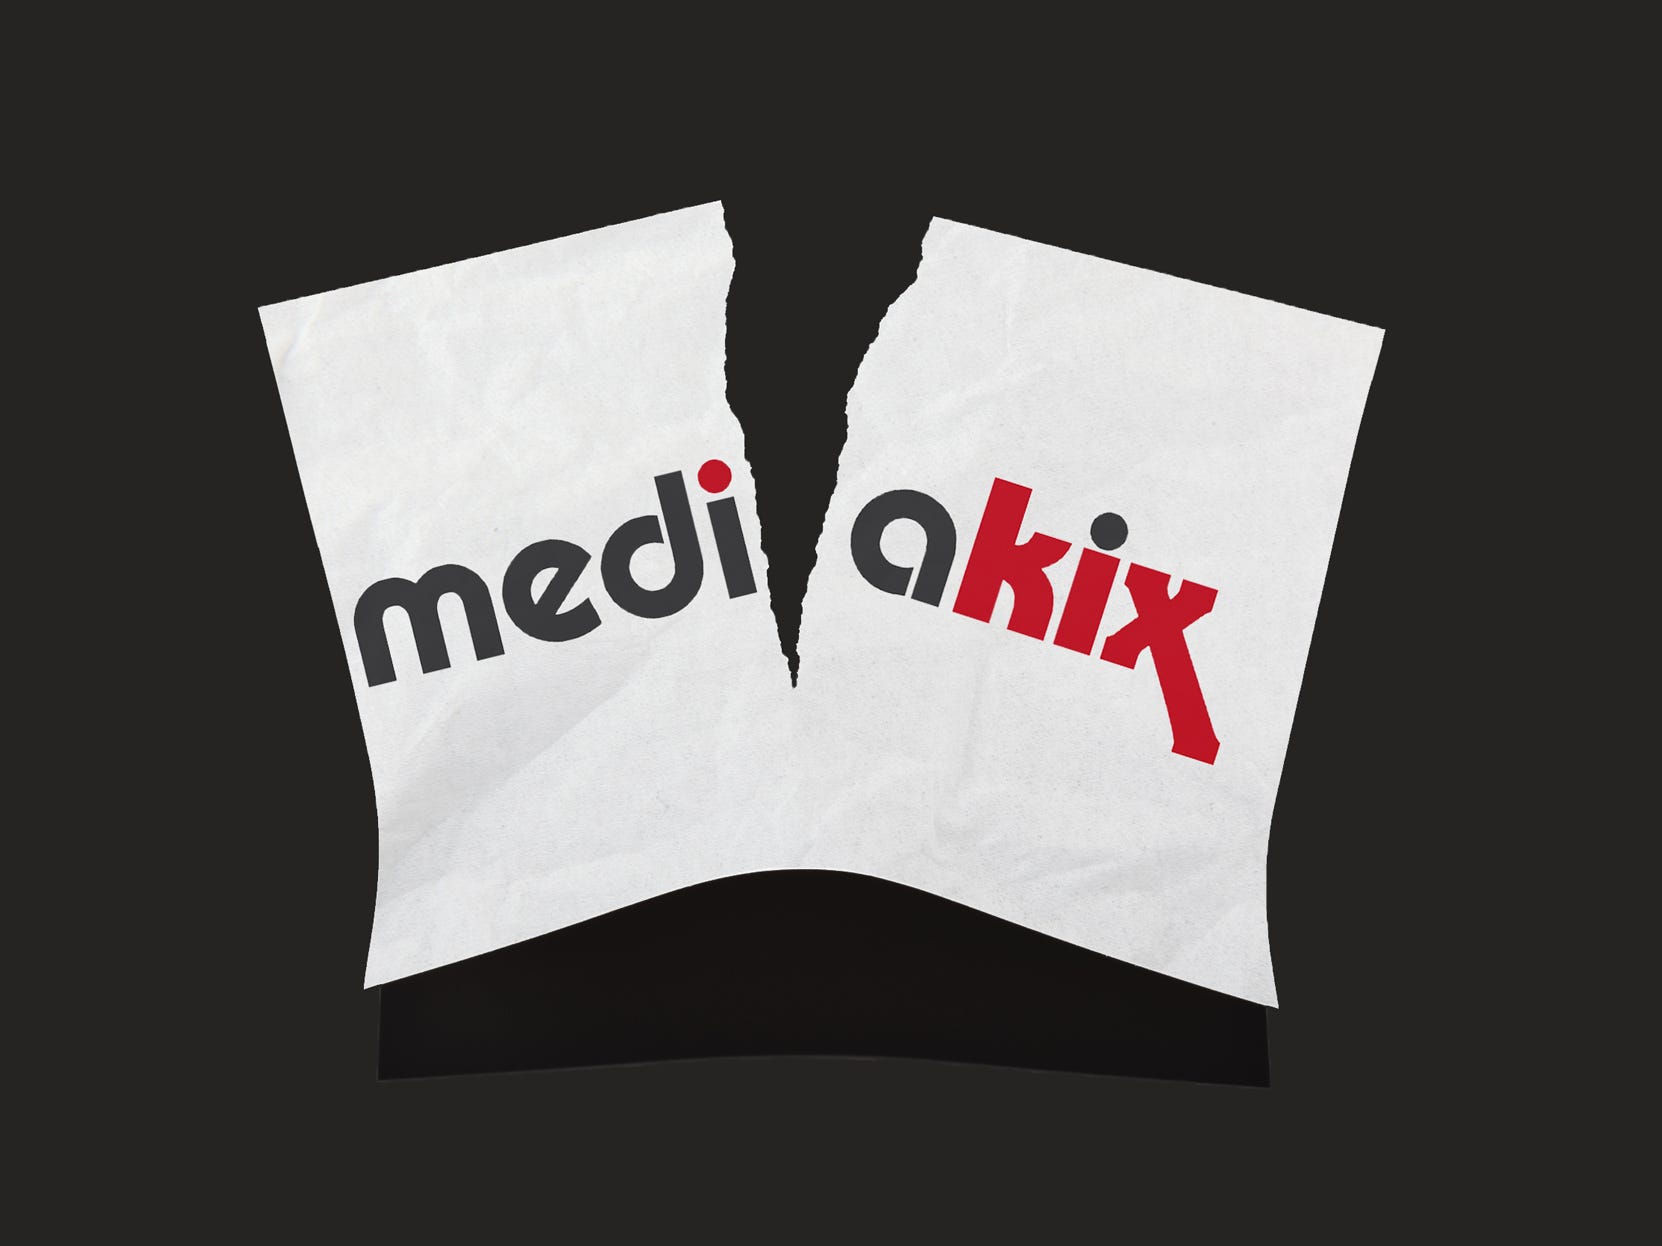 Mediakix influencer marketing agency